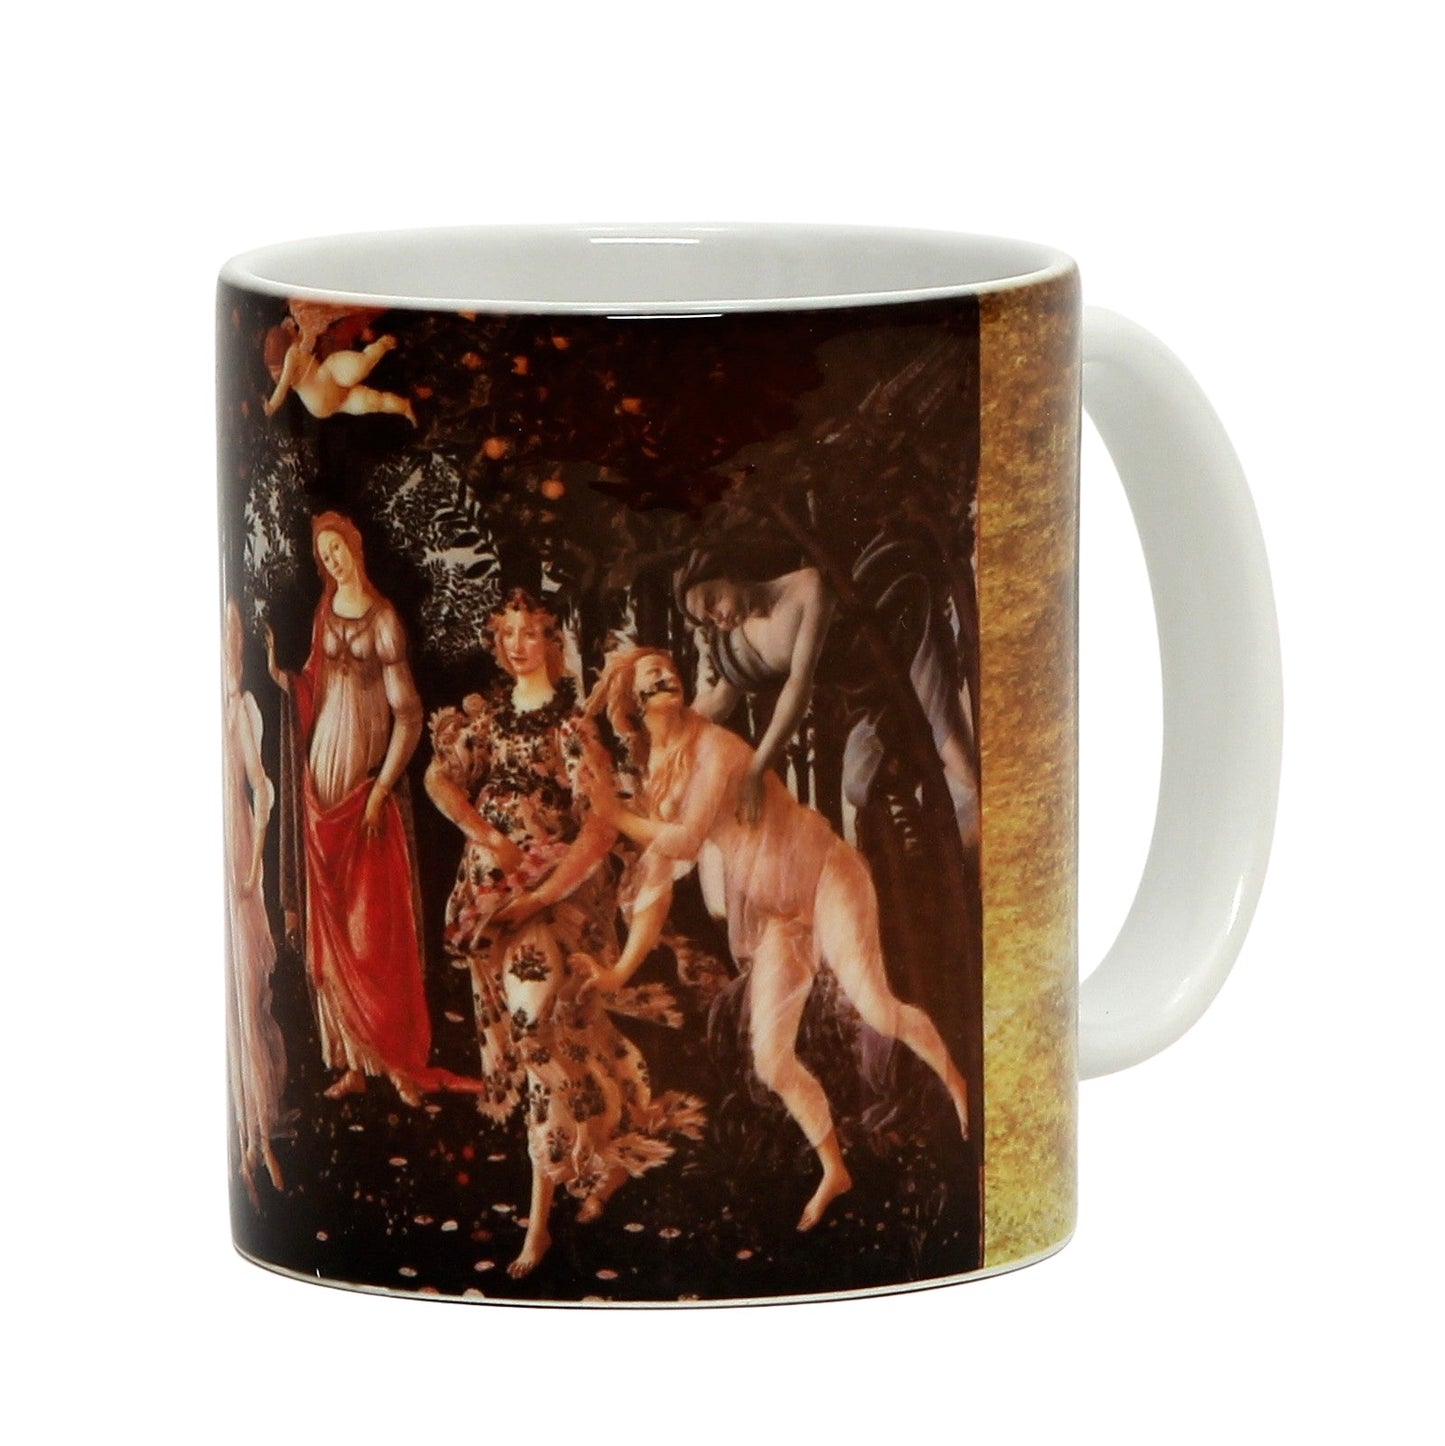 SUBLIMART: Affresco Mug - "Primavera" by Sandro Botticelli